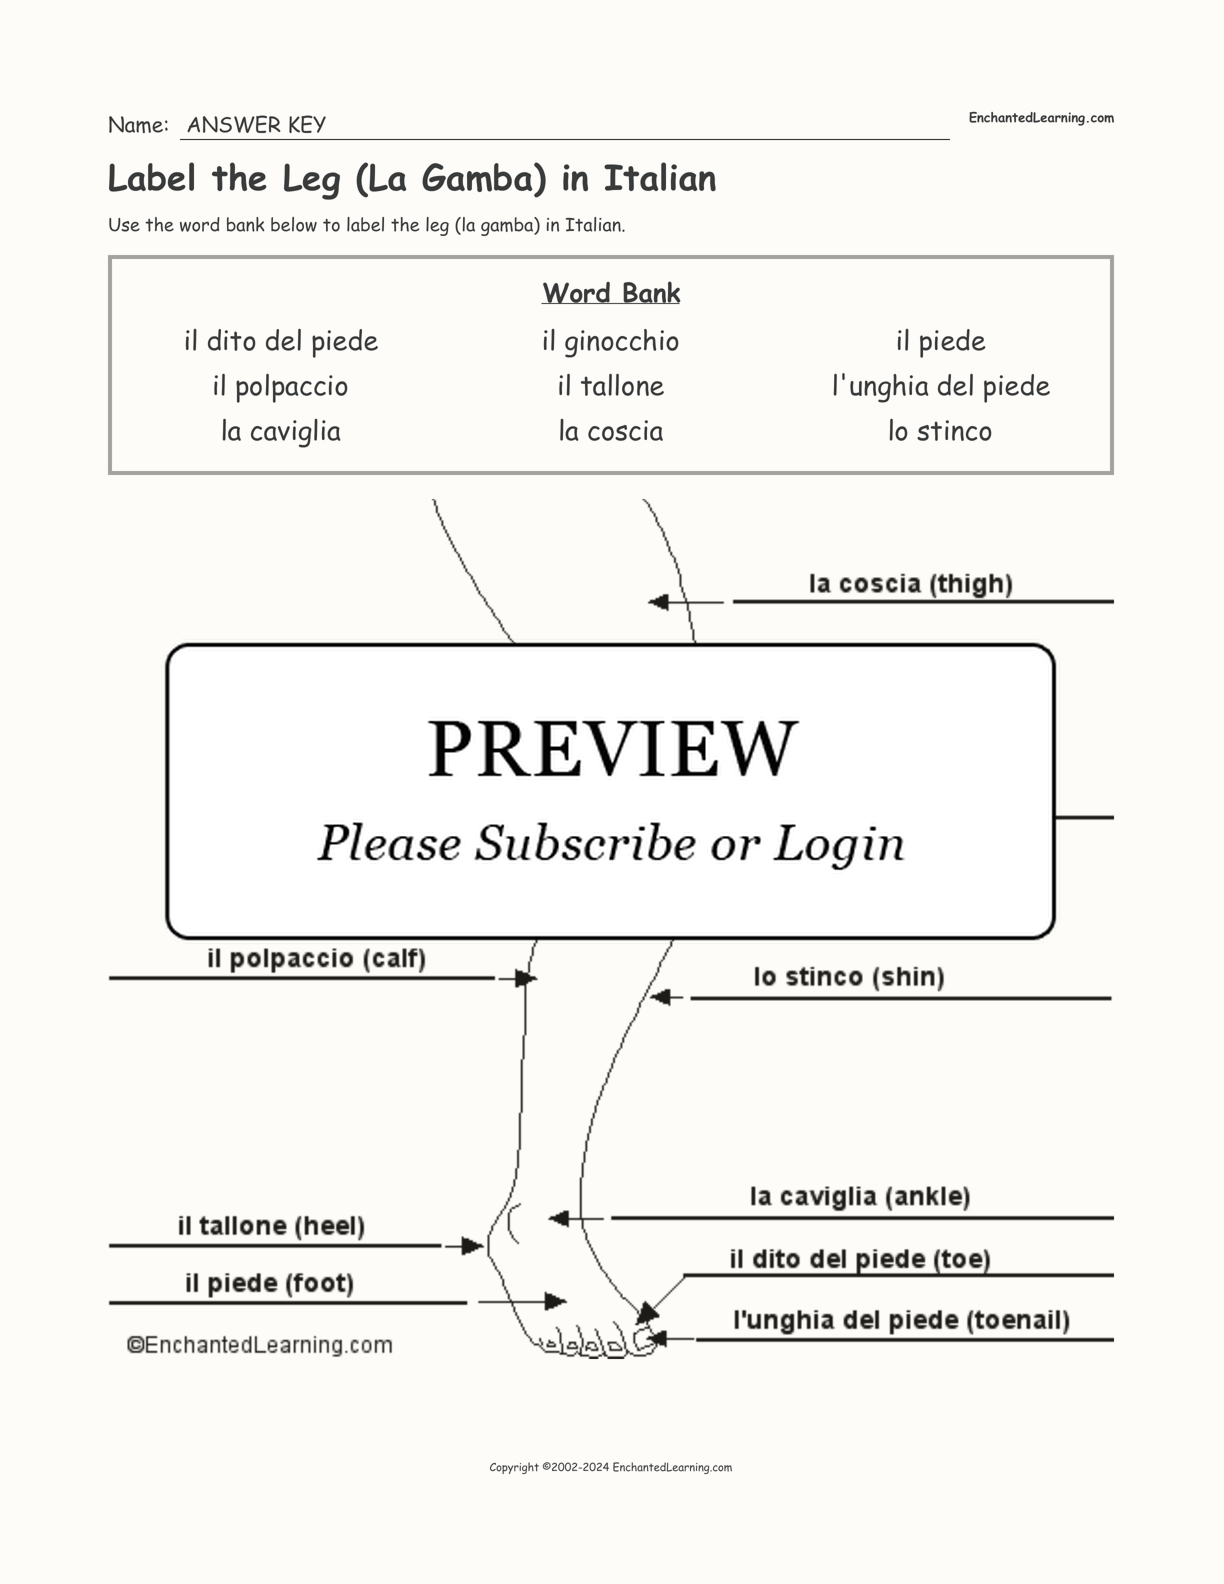 Label the Leg (La Gamba) in Italian interactive worksheet page 2